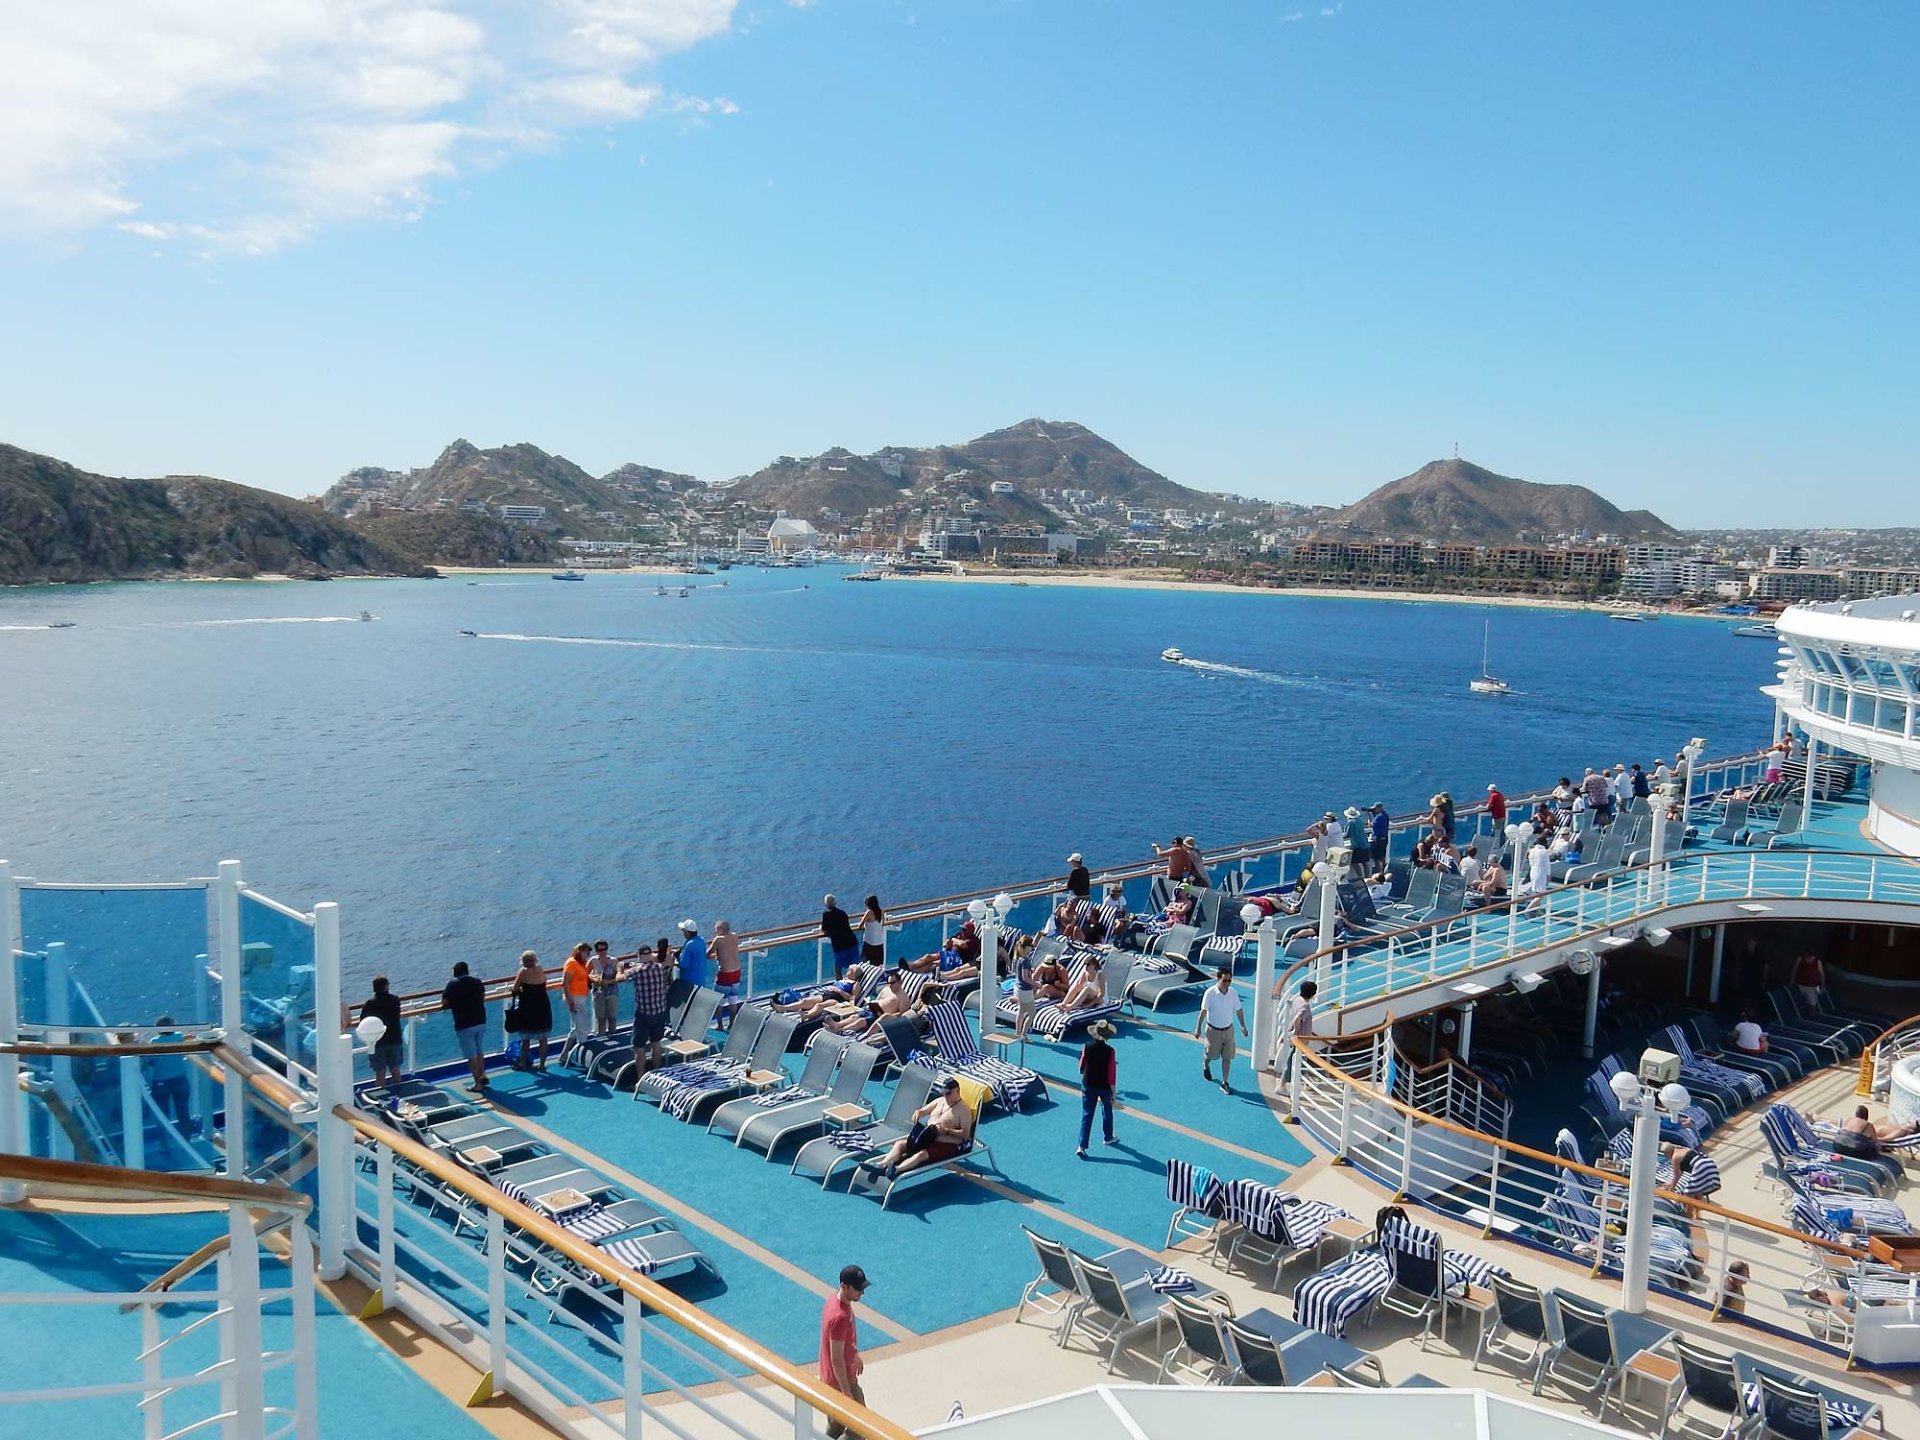 Mexican Riviera Cruises